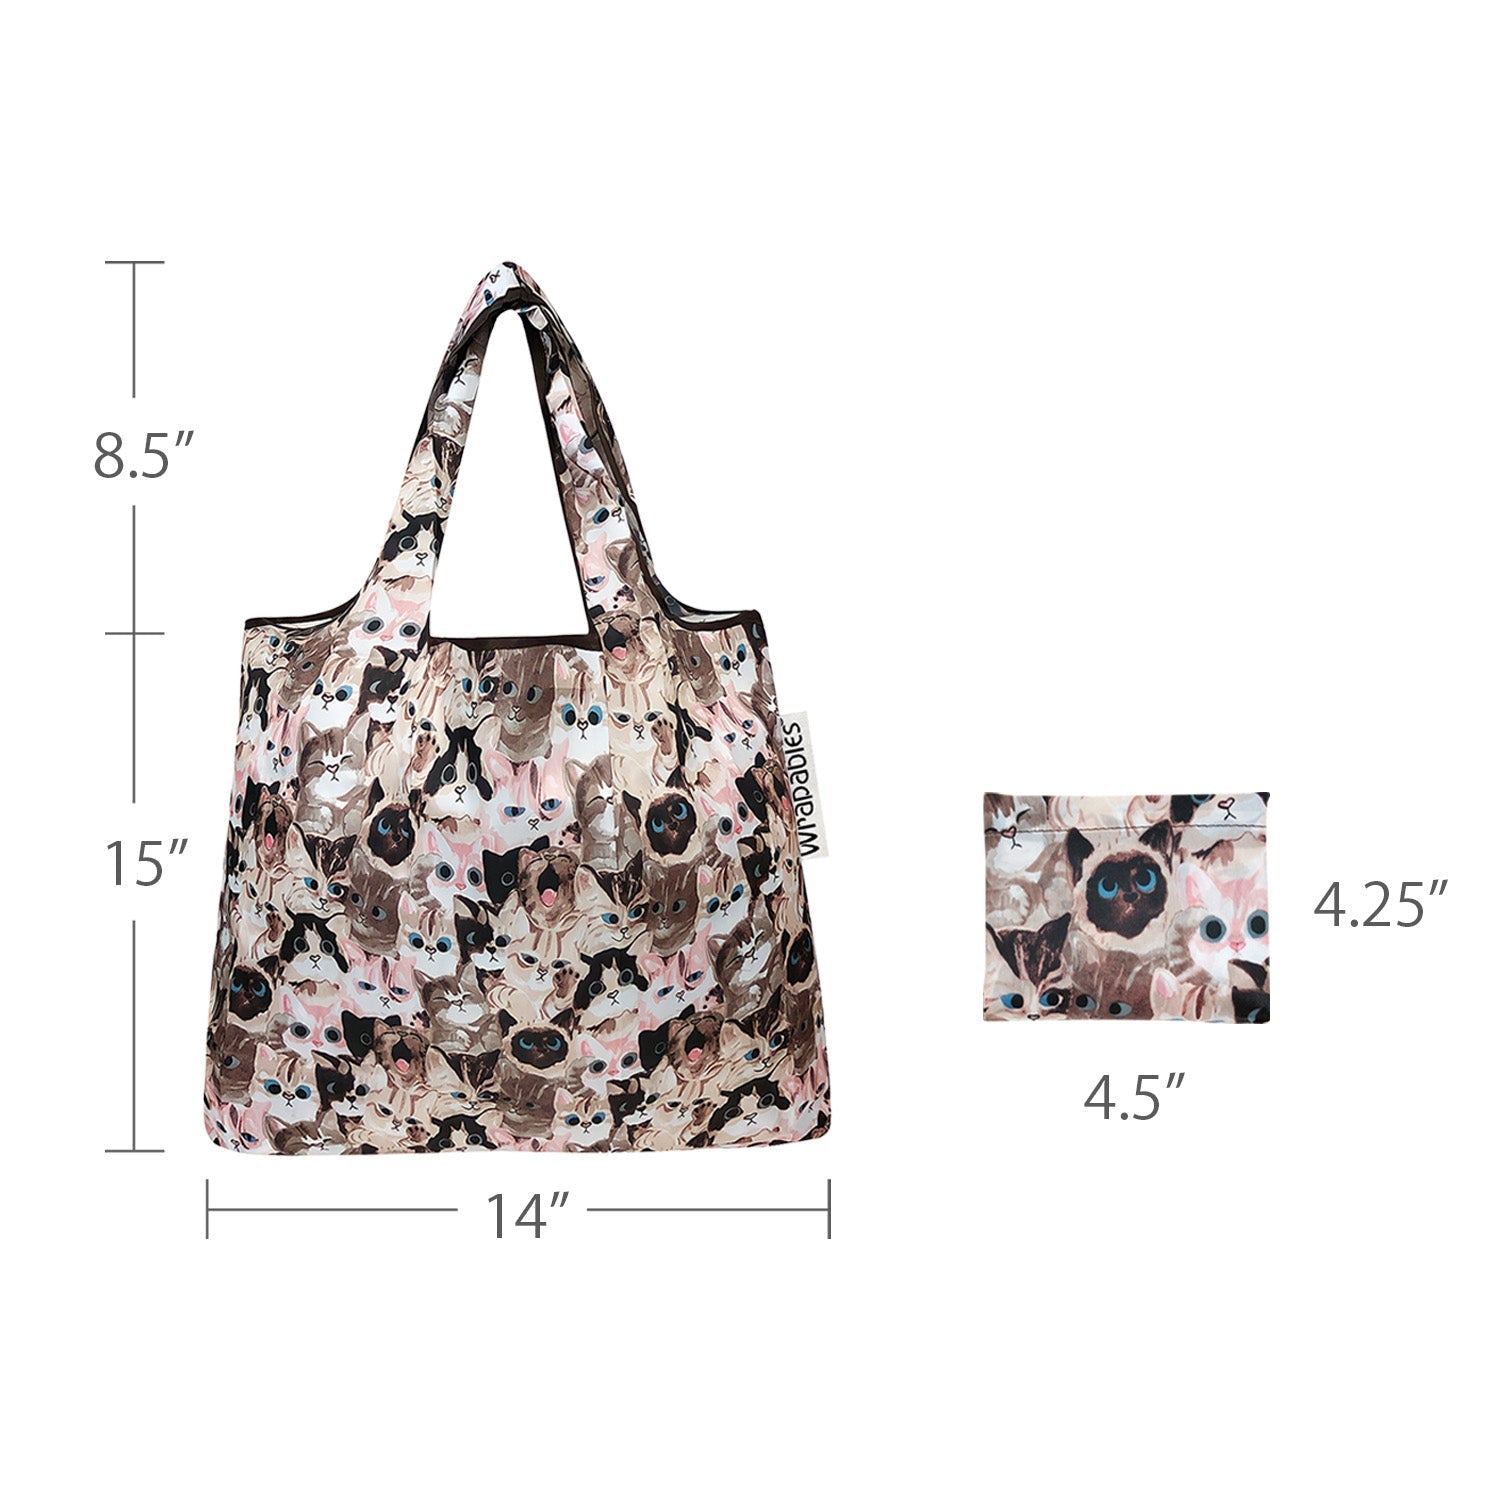 Wrapables JoliBag Collection Reusable Shopping Bag (Set of 2) Cat & Dog Faces